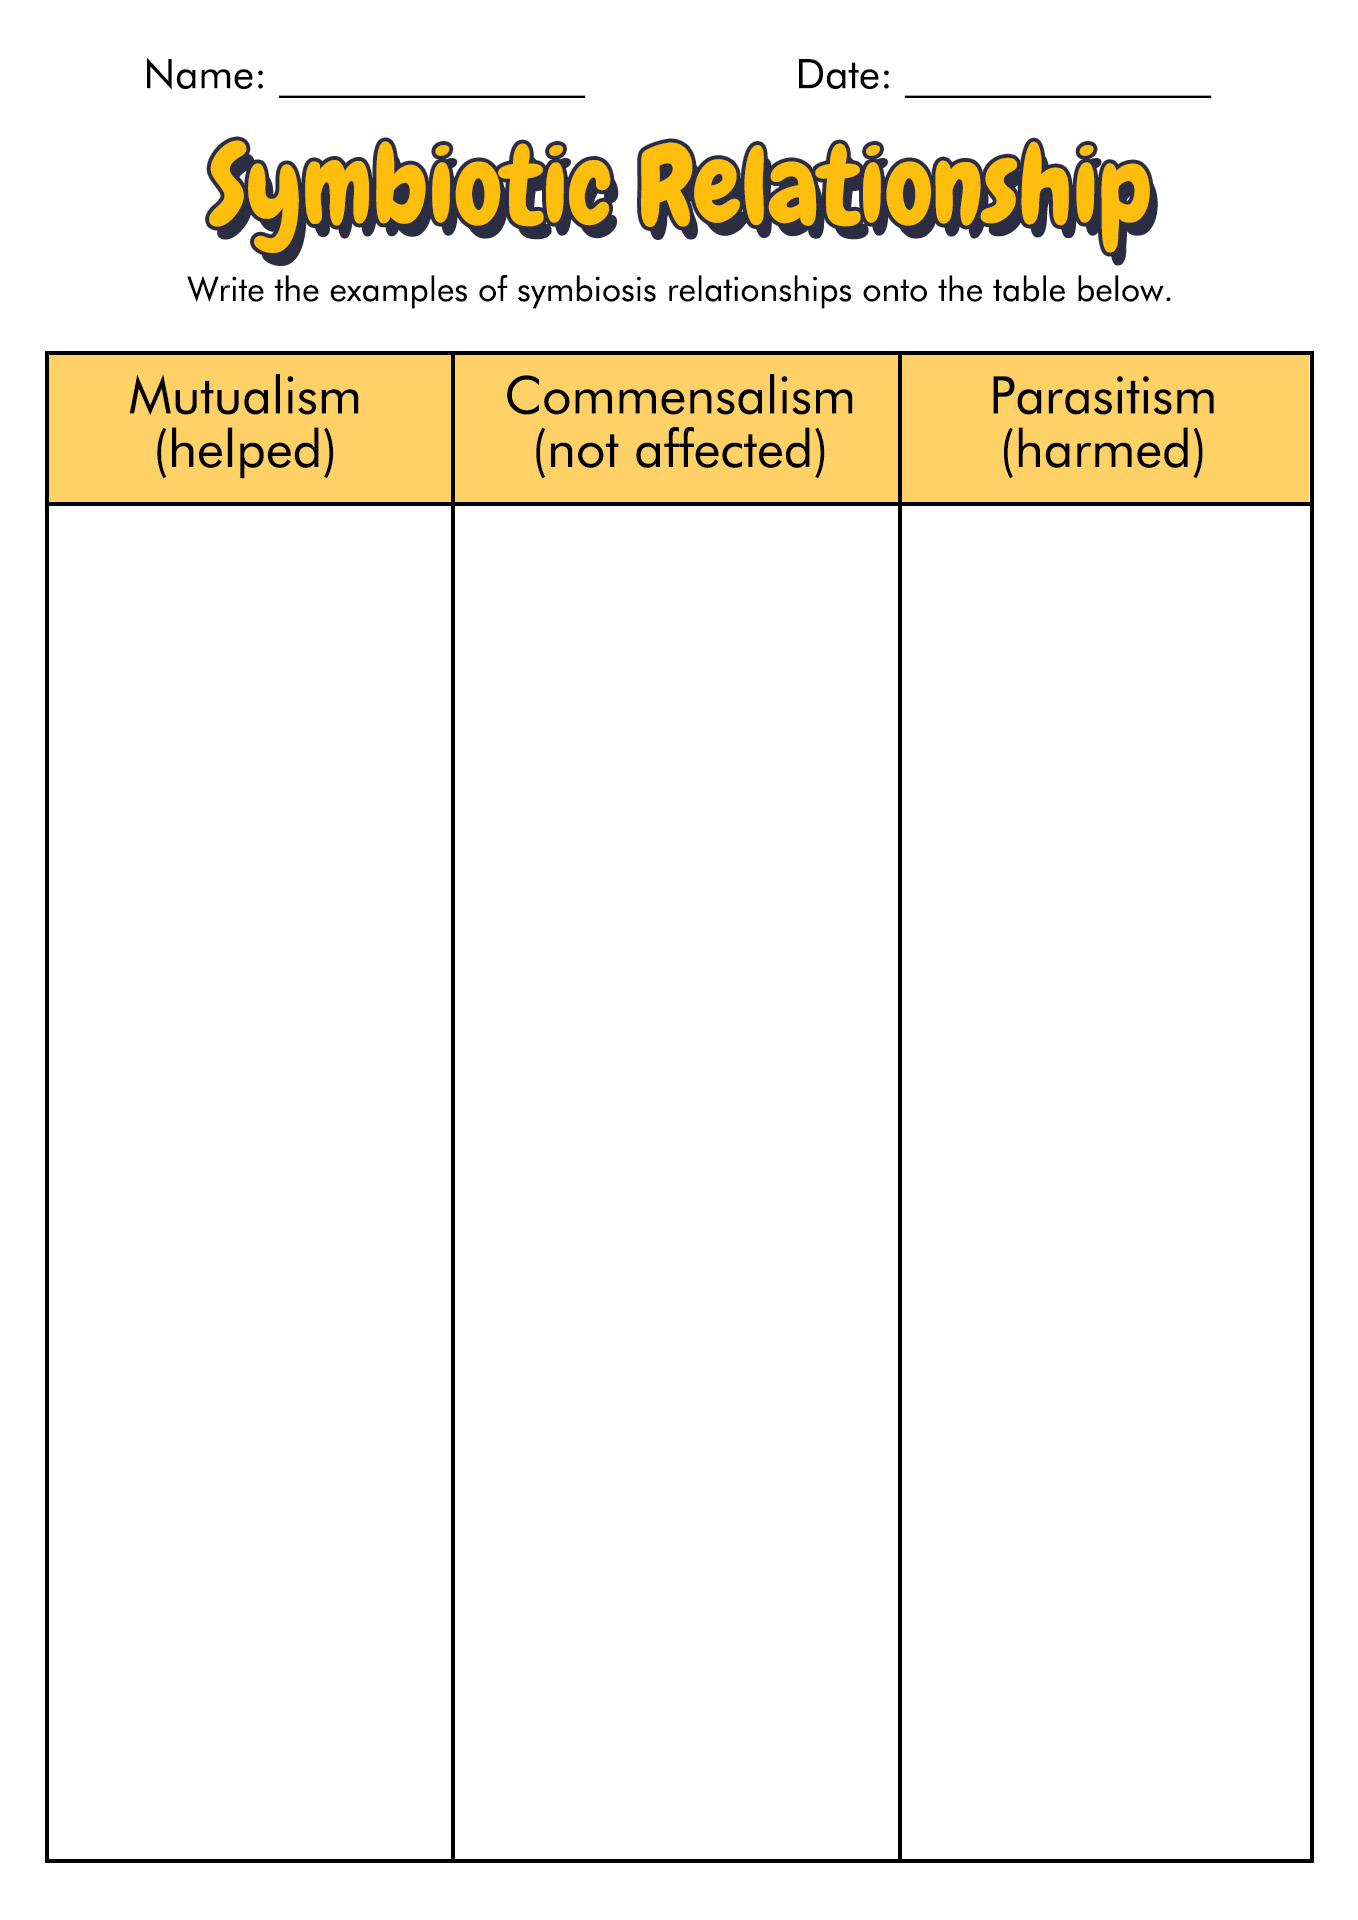 Types of Symbiosis Worksheet Answers Image